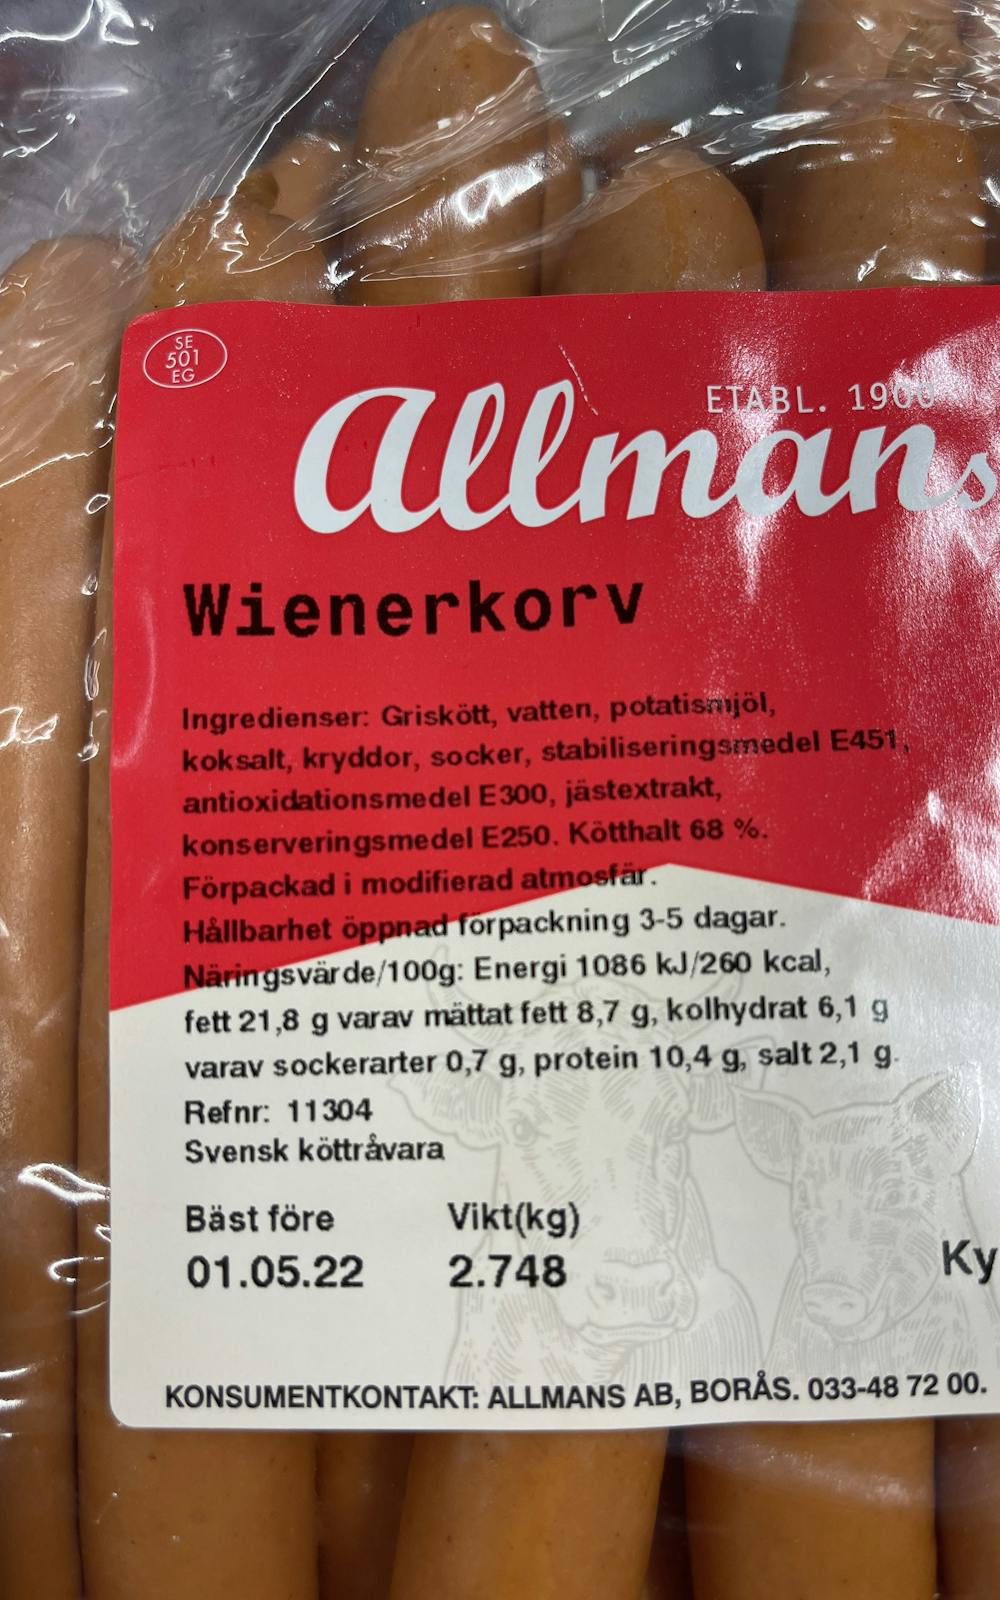 Ingrediensliste - Wienerkorv, Allmann